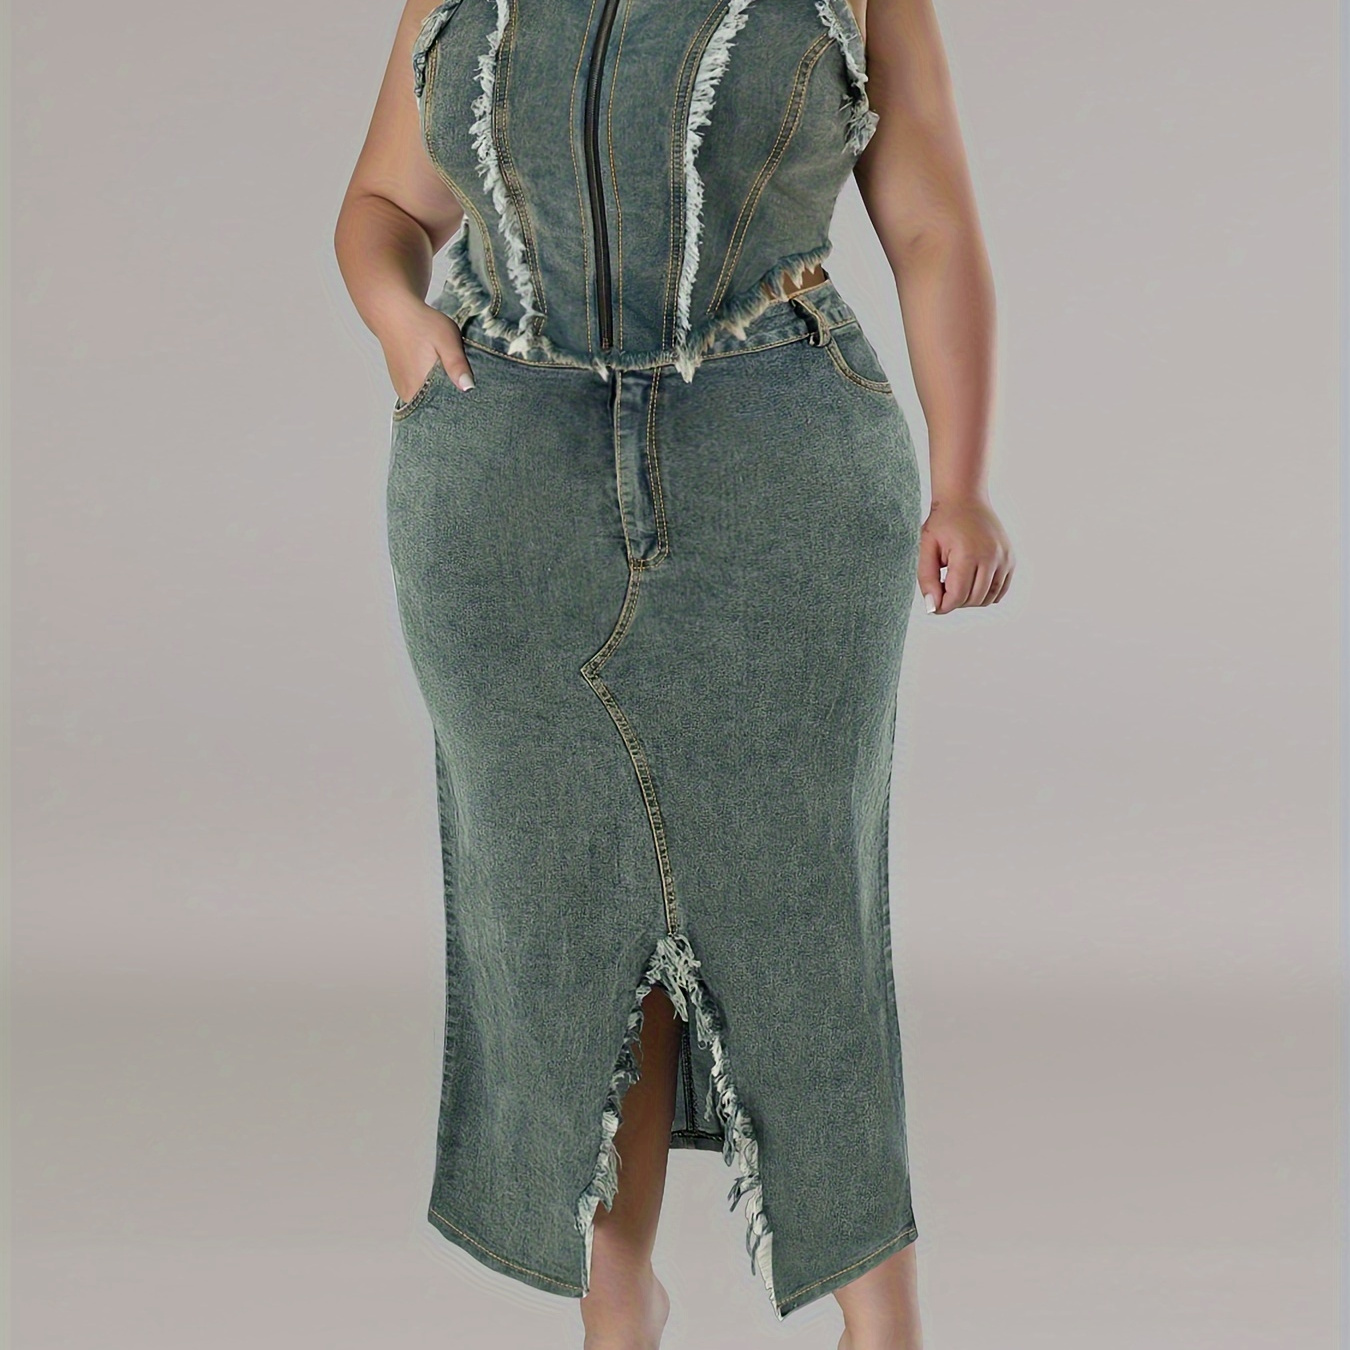 

Women's Plus Size Denim Top & Skirt Set, Casual Sleeveless Jean Dress With Frayed Hem Detail, Zippertrendy Streetwear For Full-figured Fashion